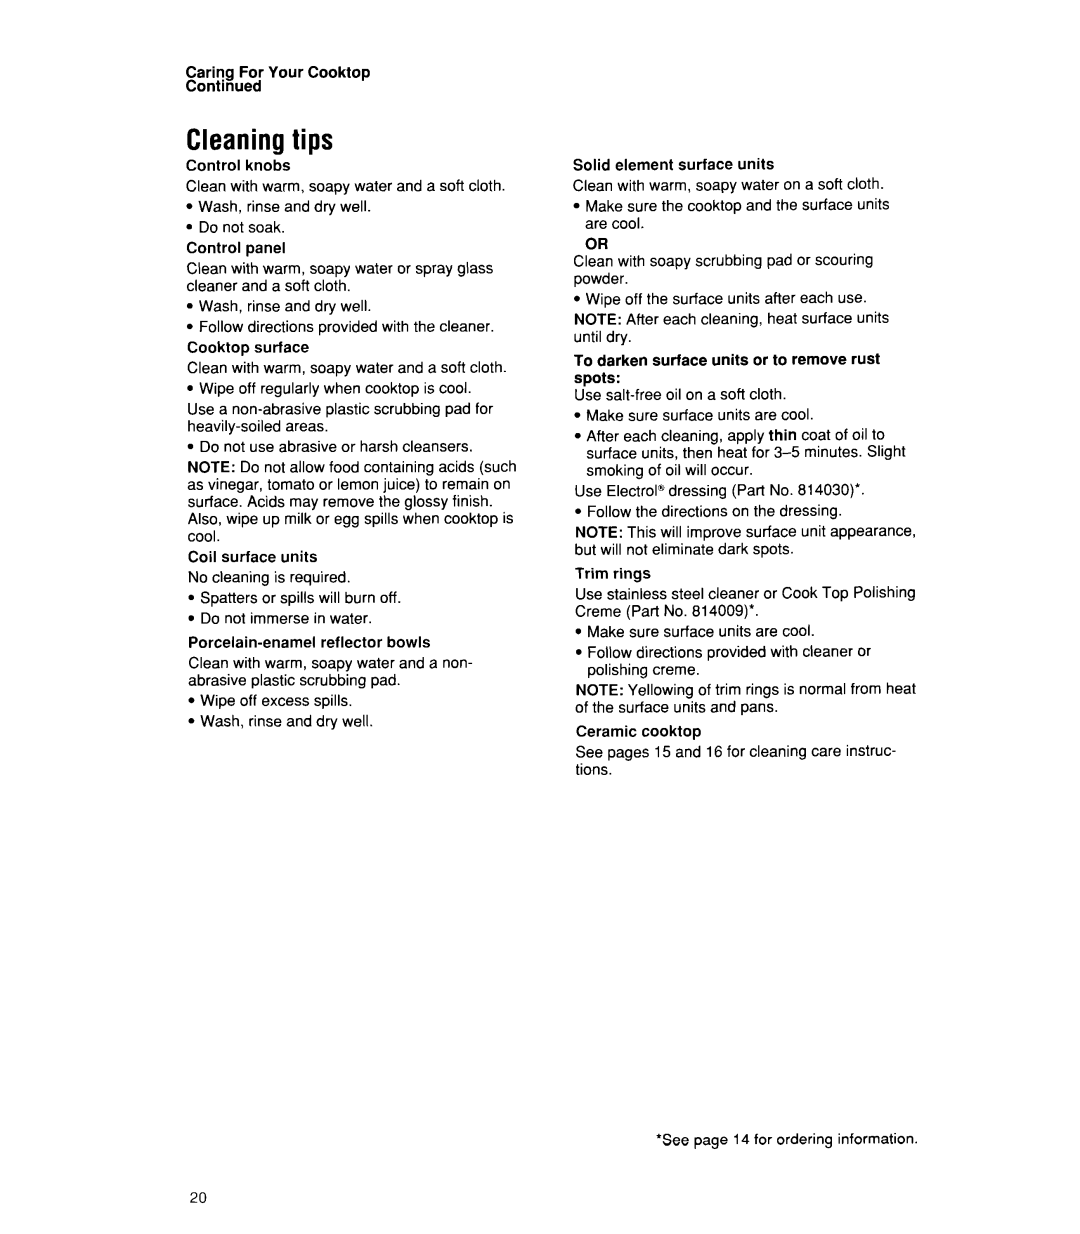 Whirlpool RC8900XX manual Cleaningtips 